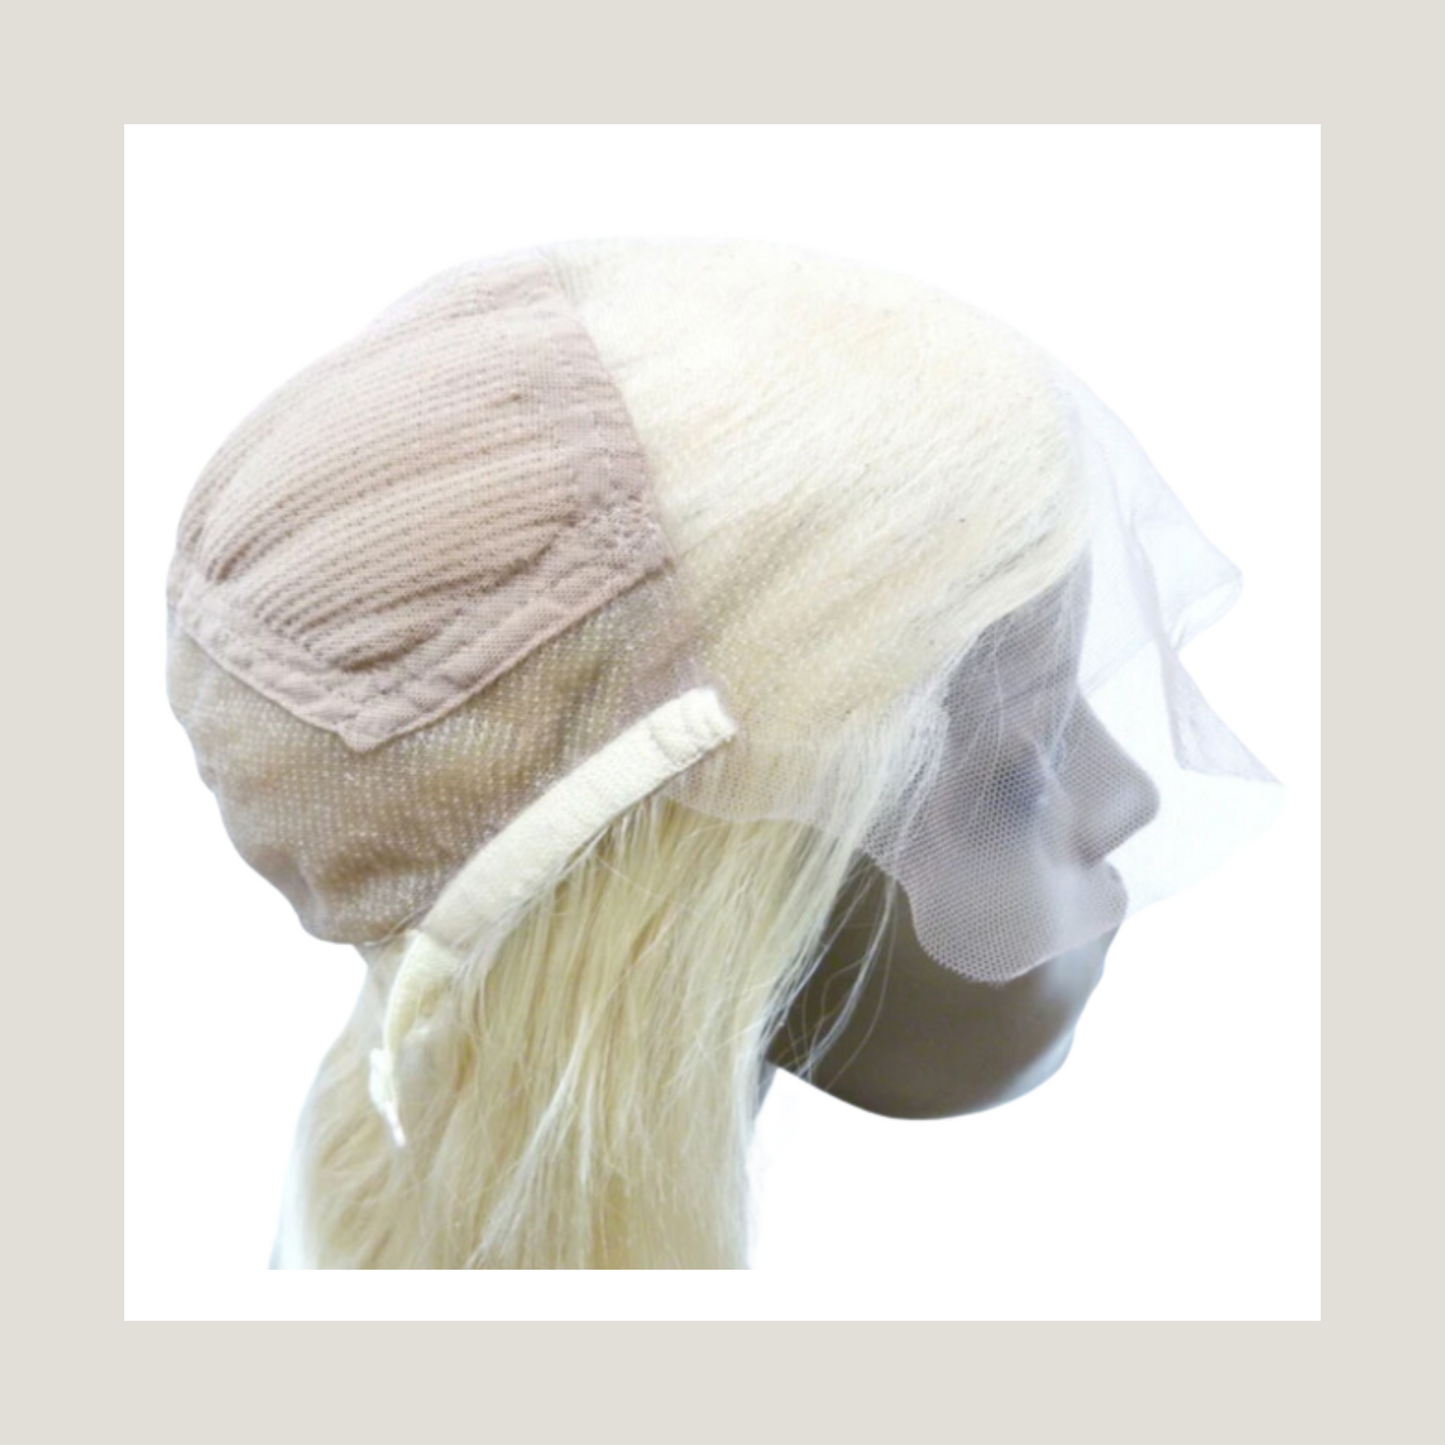 European Virgin Remy Full Lace Wig